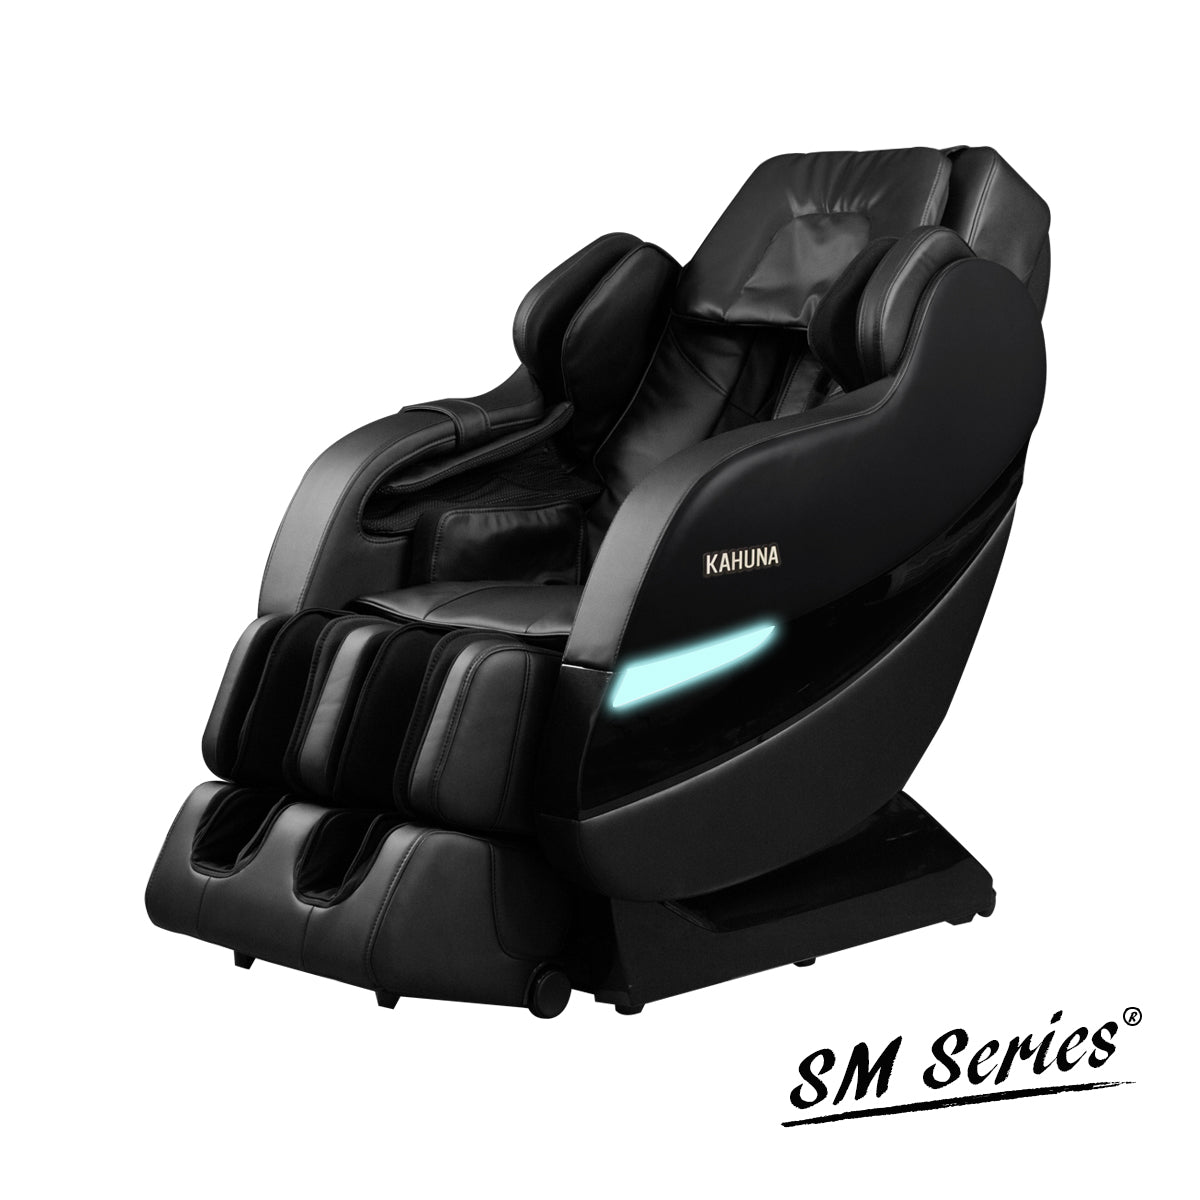 Kahuna SM-7300 Massage Chair Black